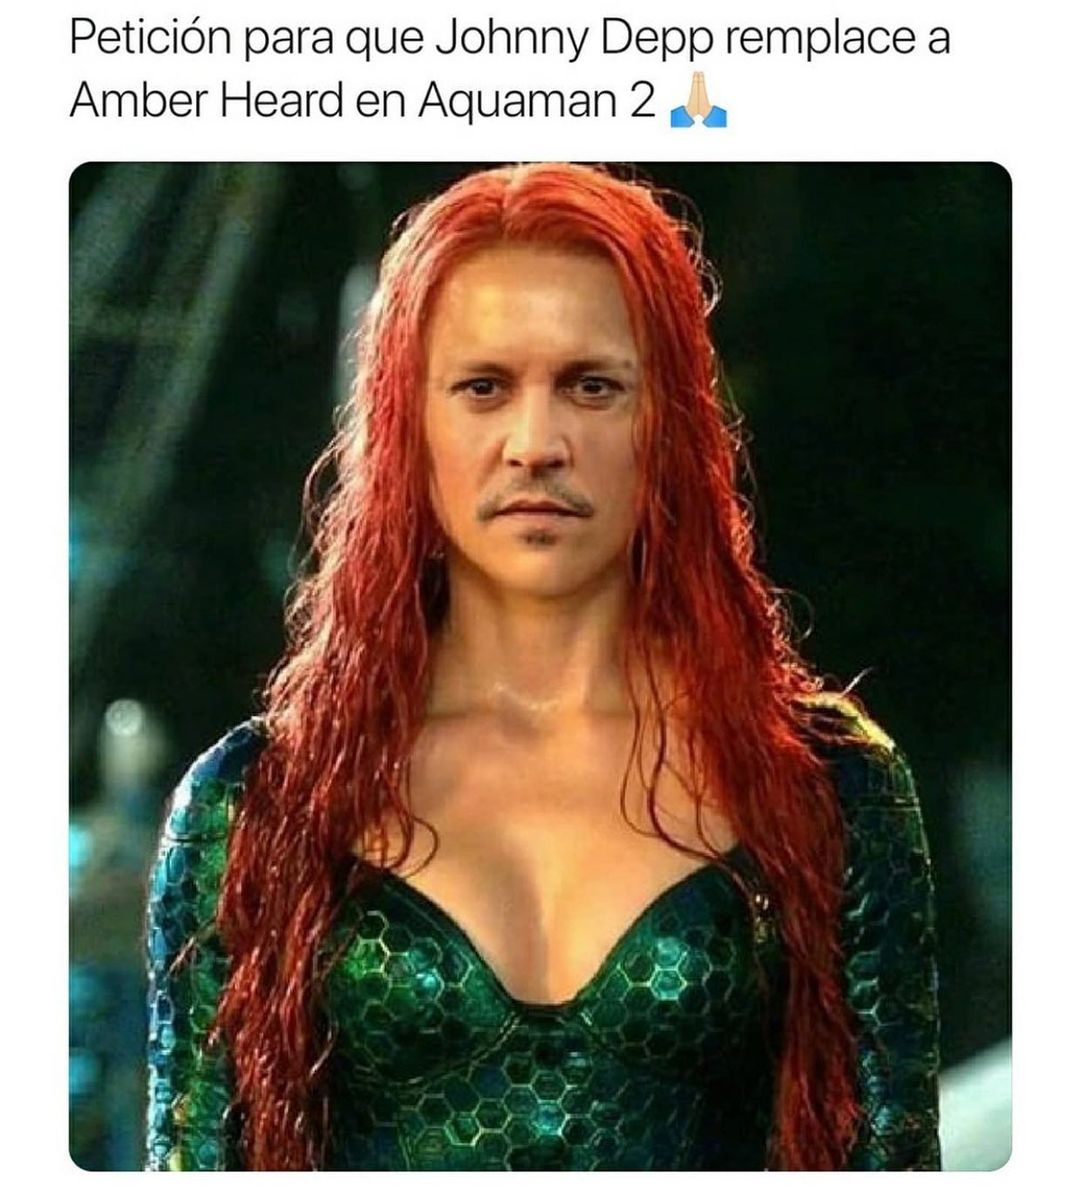 Petición para que Johnny Depp remplace a Amber Heard en Aquaman 2.